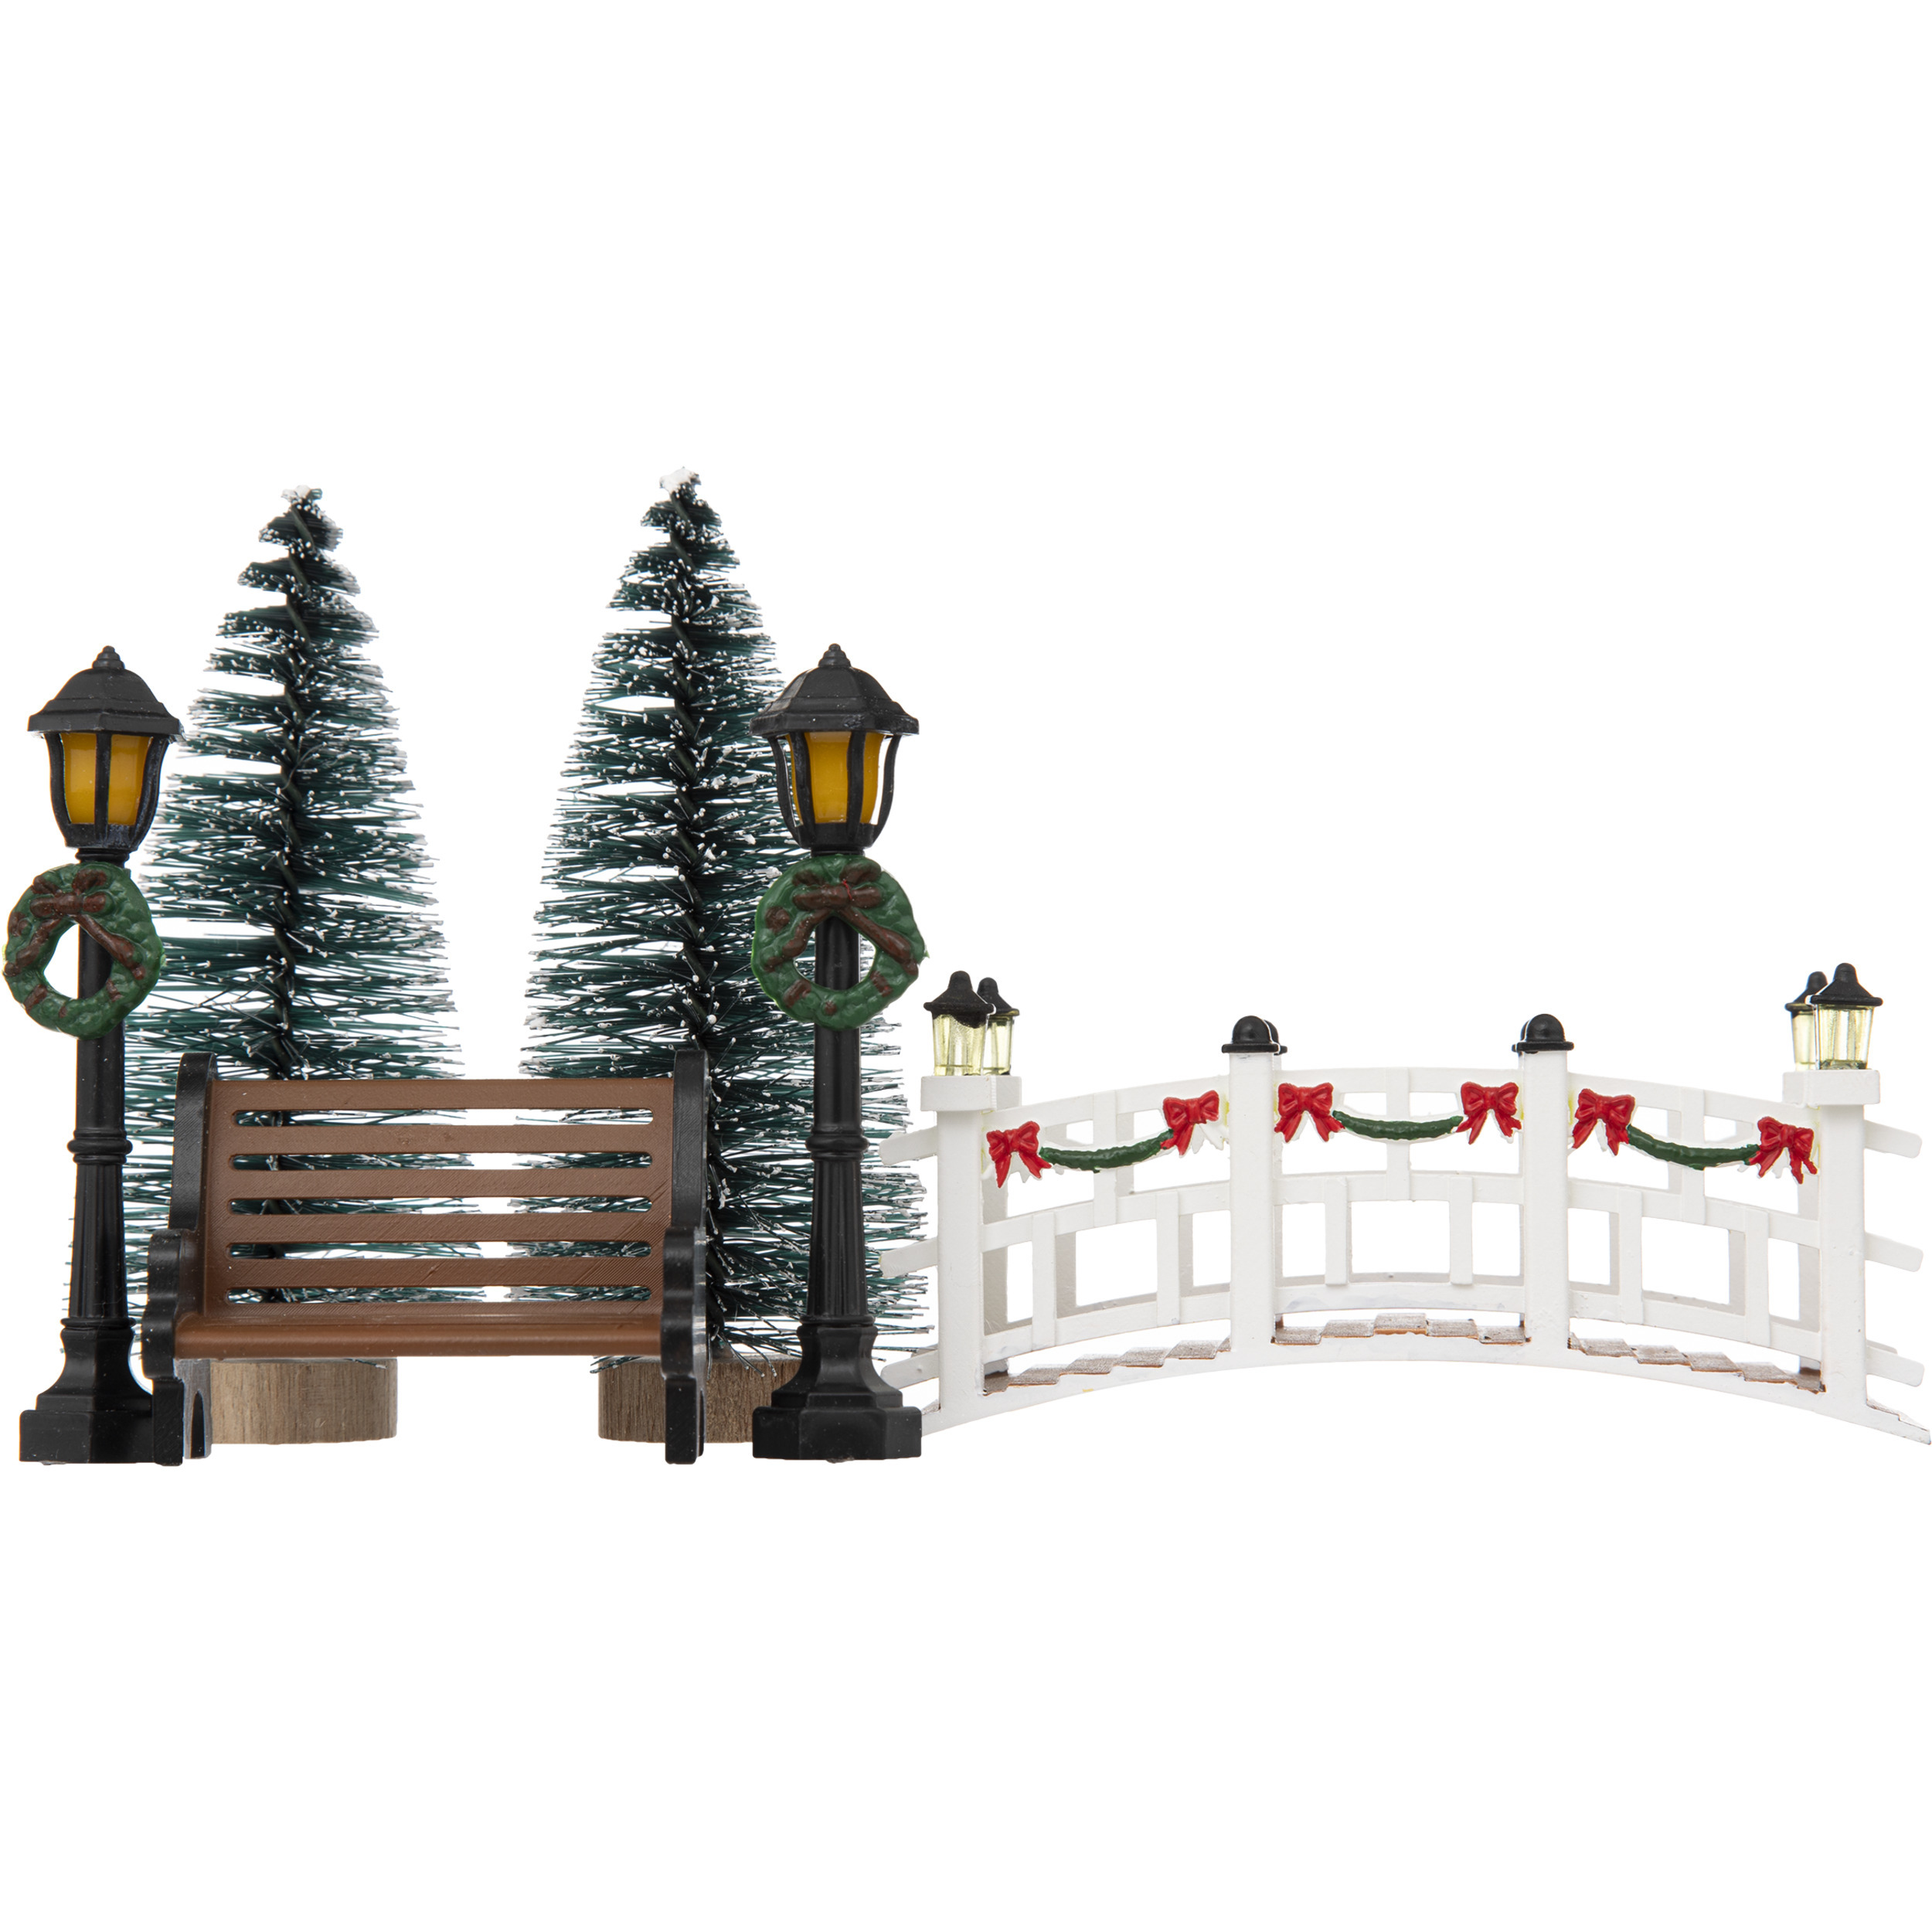 Kerstdorp accessoires miniatuur figuurtjes burg,boompjes,lantaarns